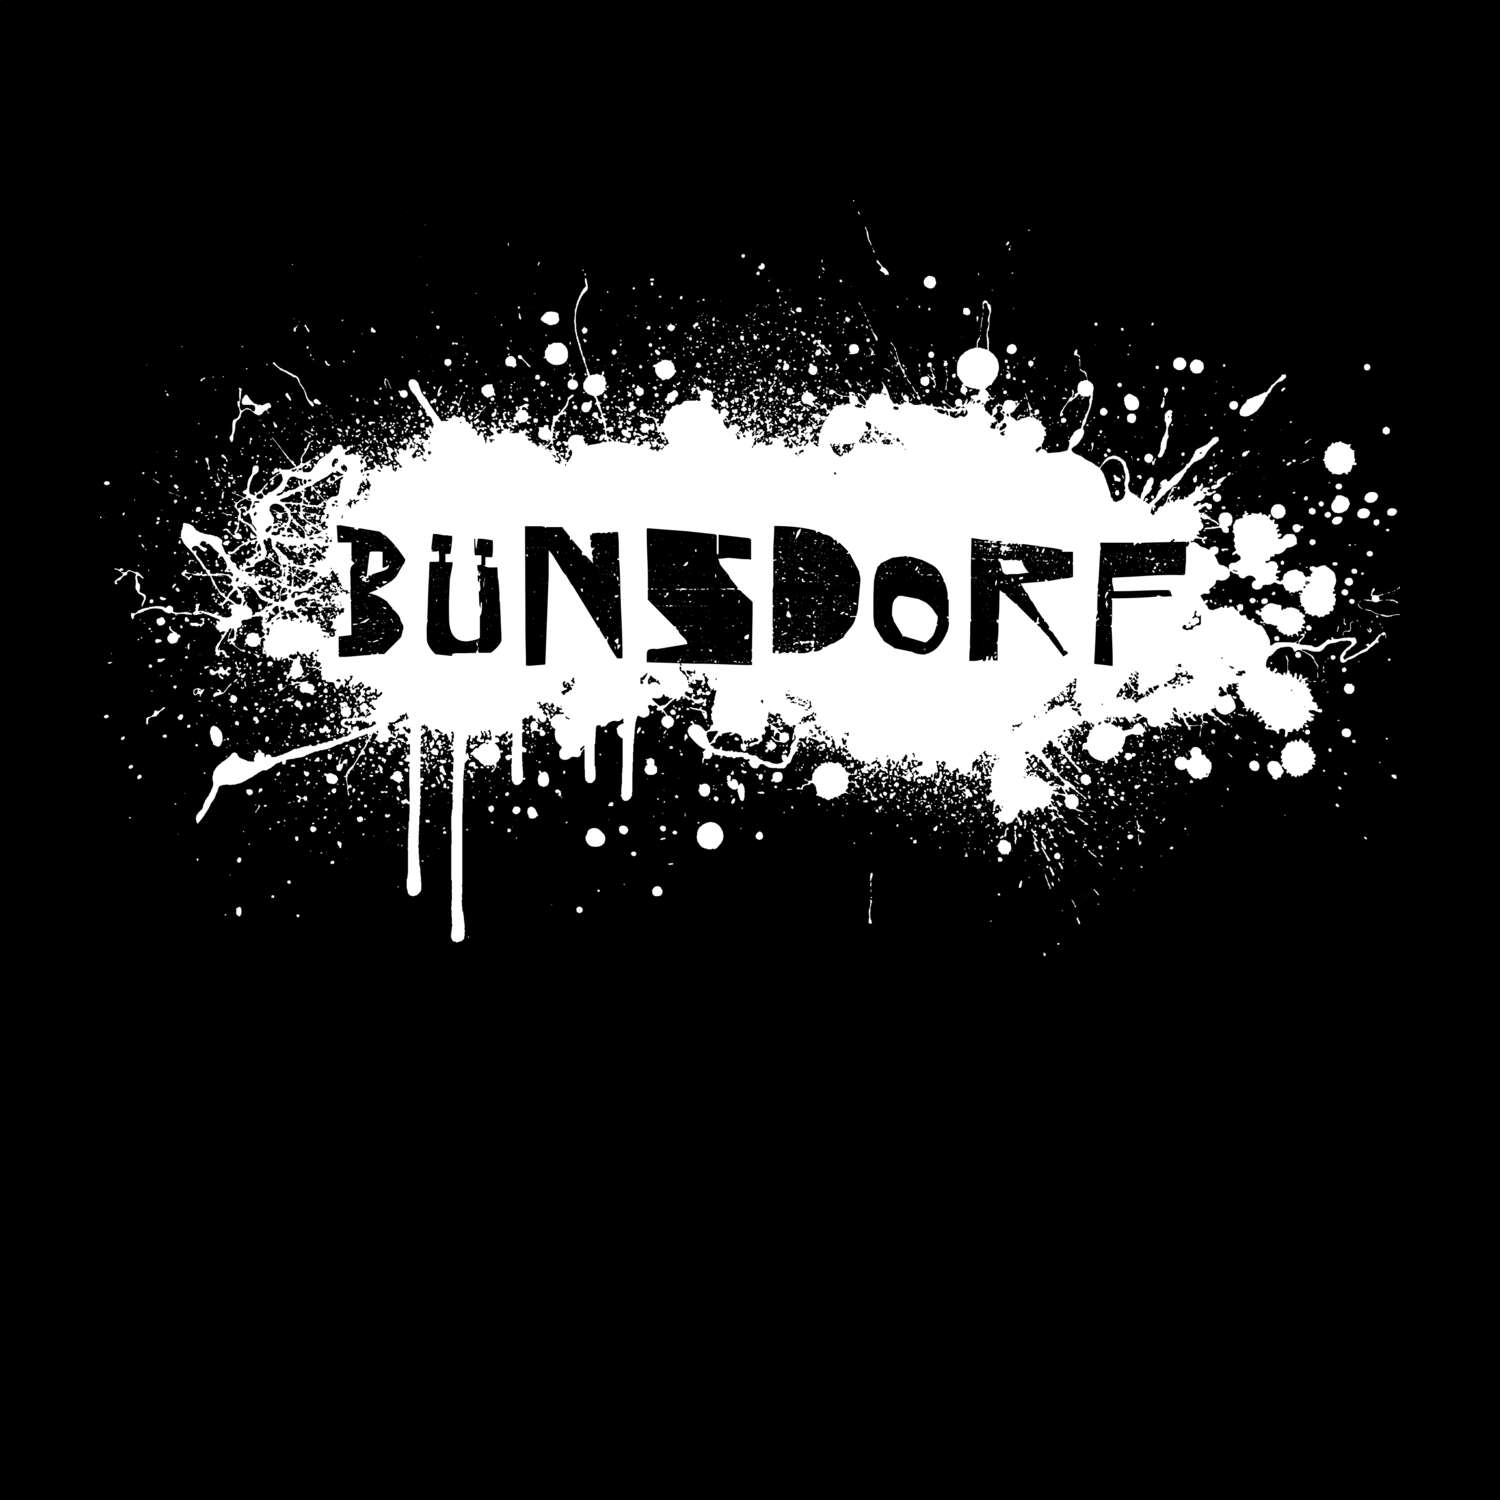 Bünsdorf T-Shirt »Paint Splash Punk«